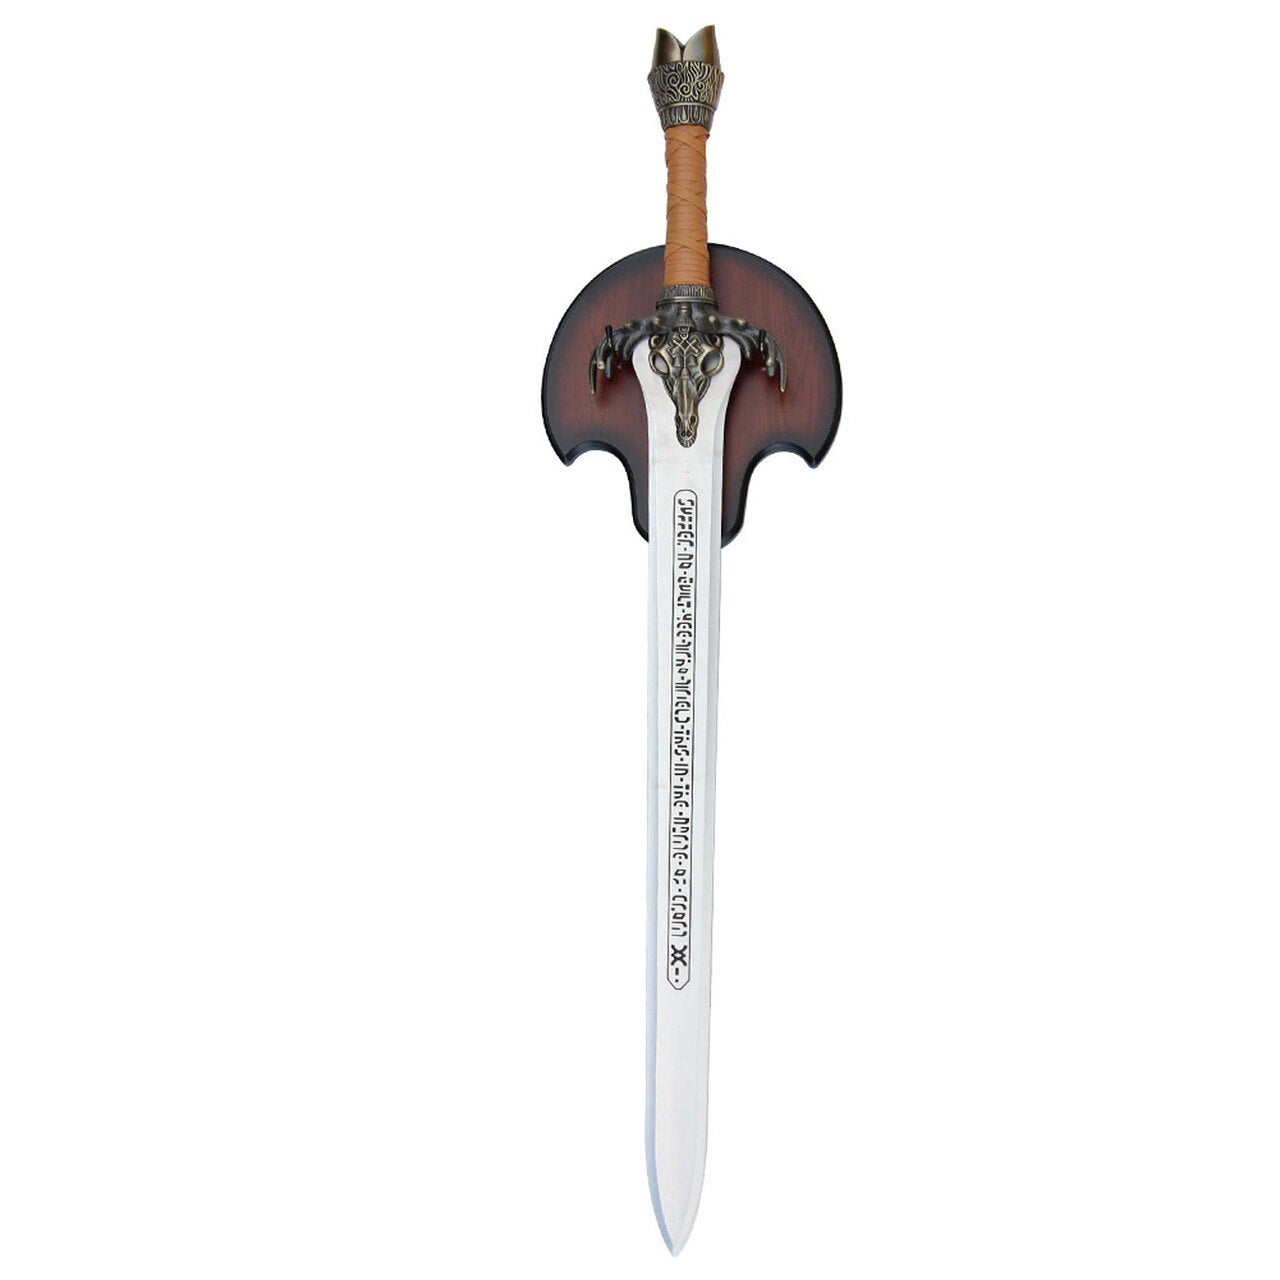 Conan father's sword for sale Barbarian Medieval Rams Head Sword